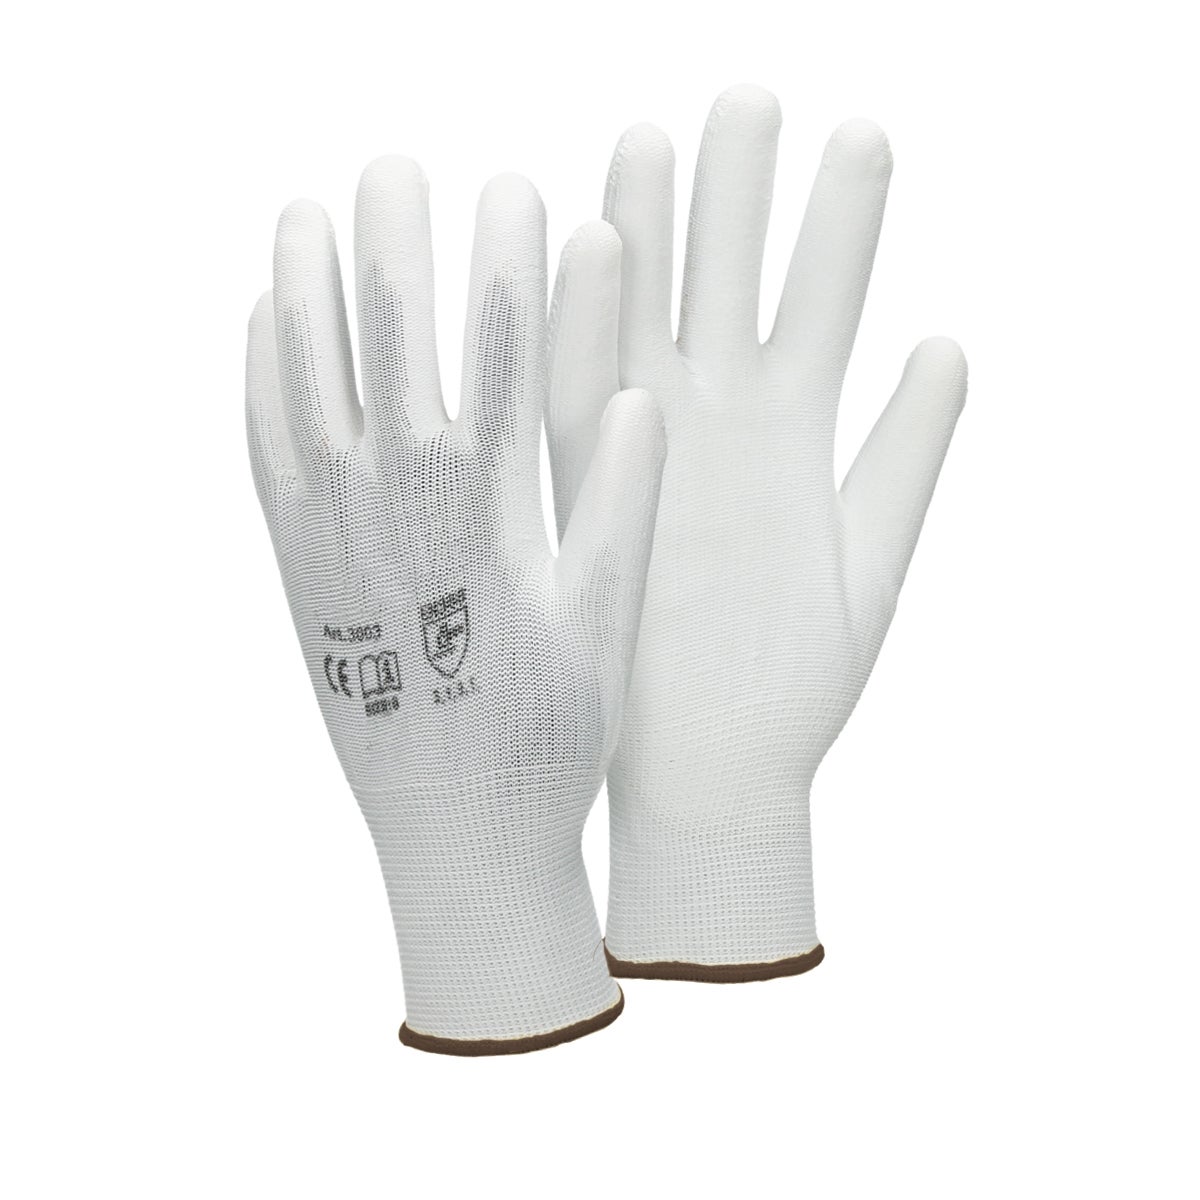 ECD Germany 12 Paar Arbeitshandschuhe mit PU-Beschichtung, Größe 9-L, Weiß, atmungsaktiv, rutschfest, robust, Mechanikerhandschuhe Montagehandschuhe Schutzhandschuhe Gartenhandschuhe Handschuhe